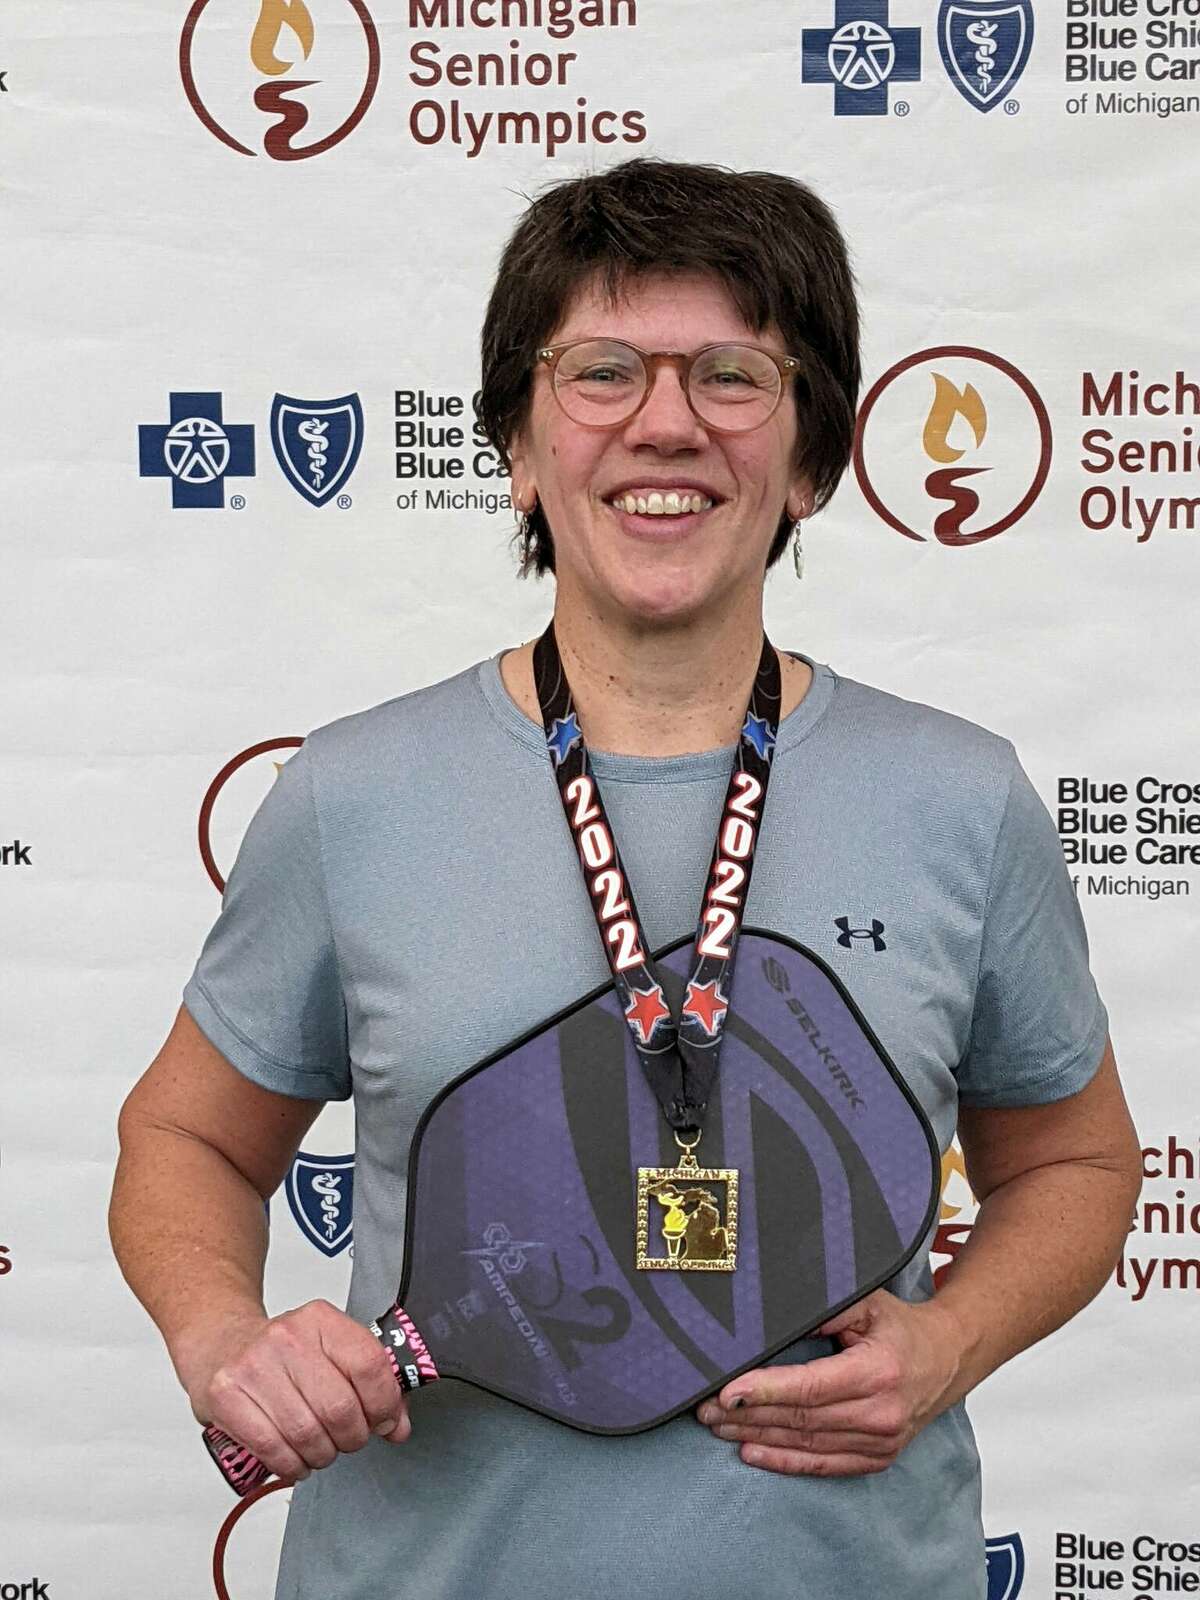 Good game Midlanders bring home pickleball medals from Michigan Senior